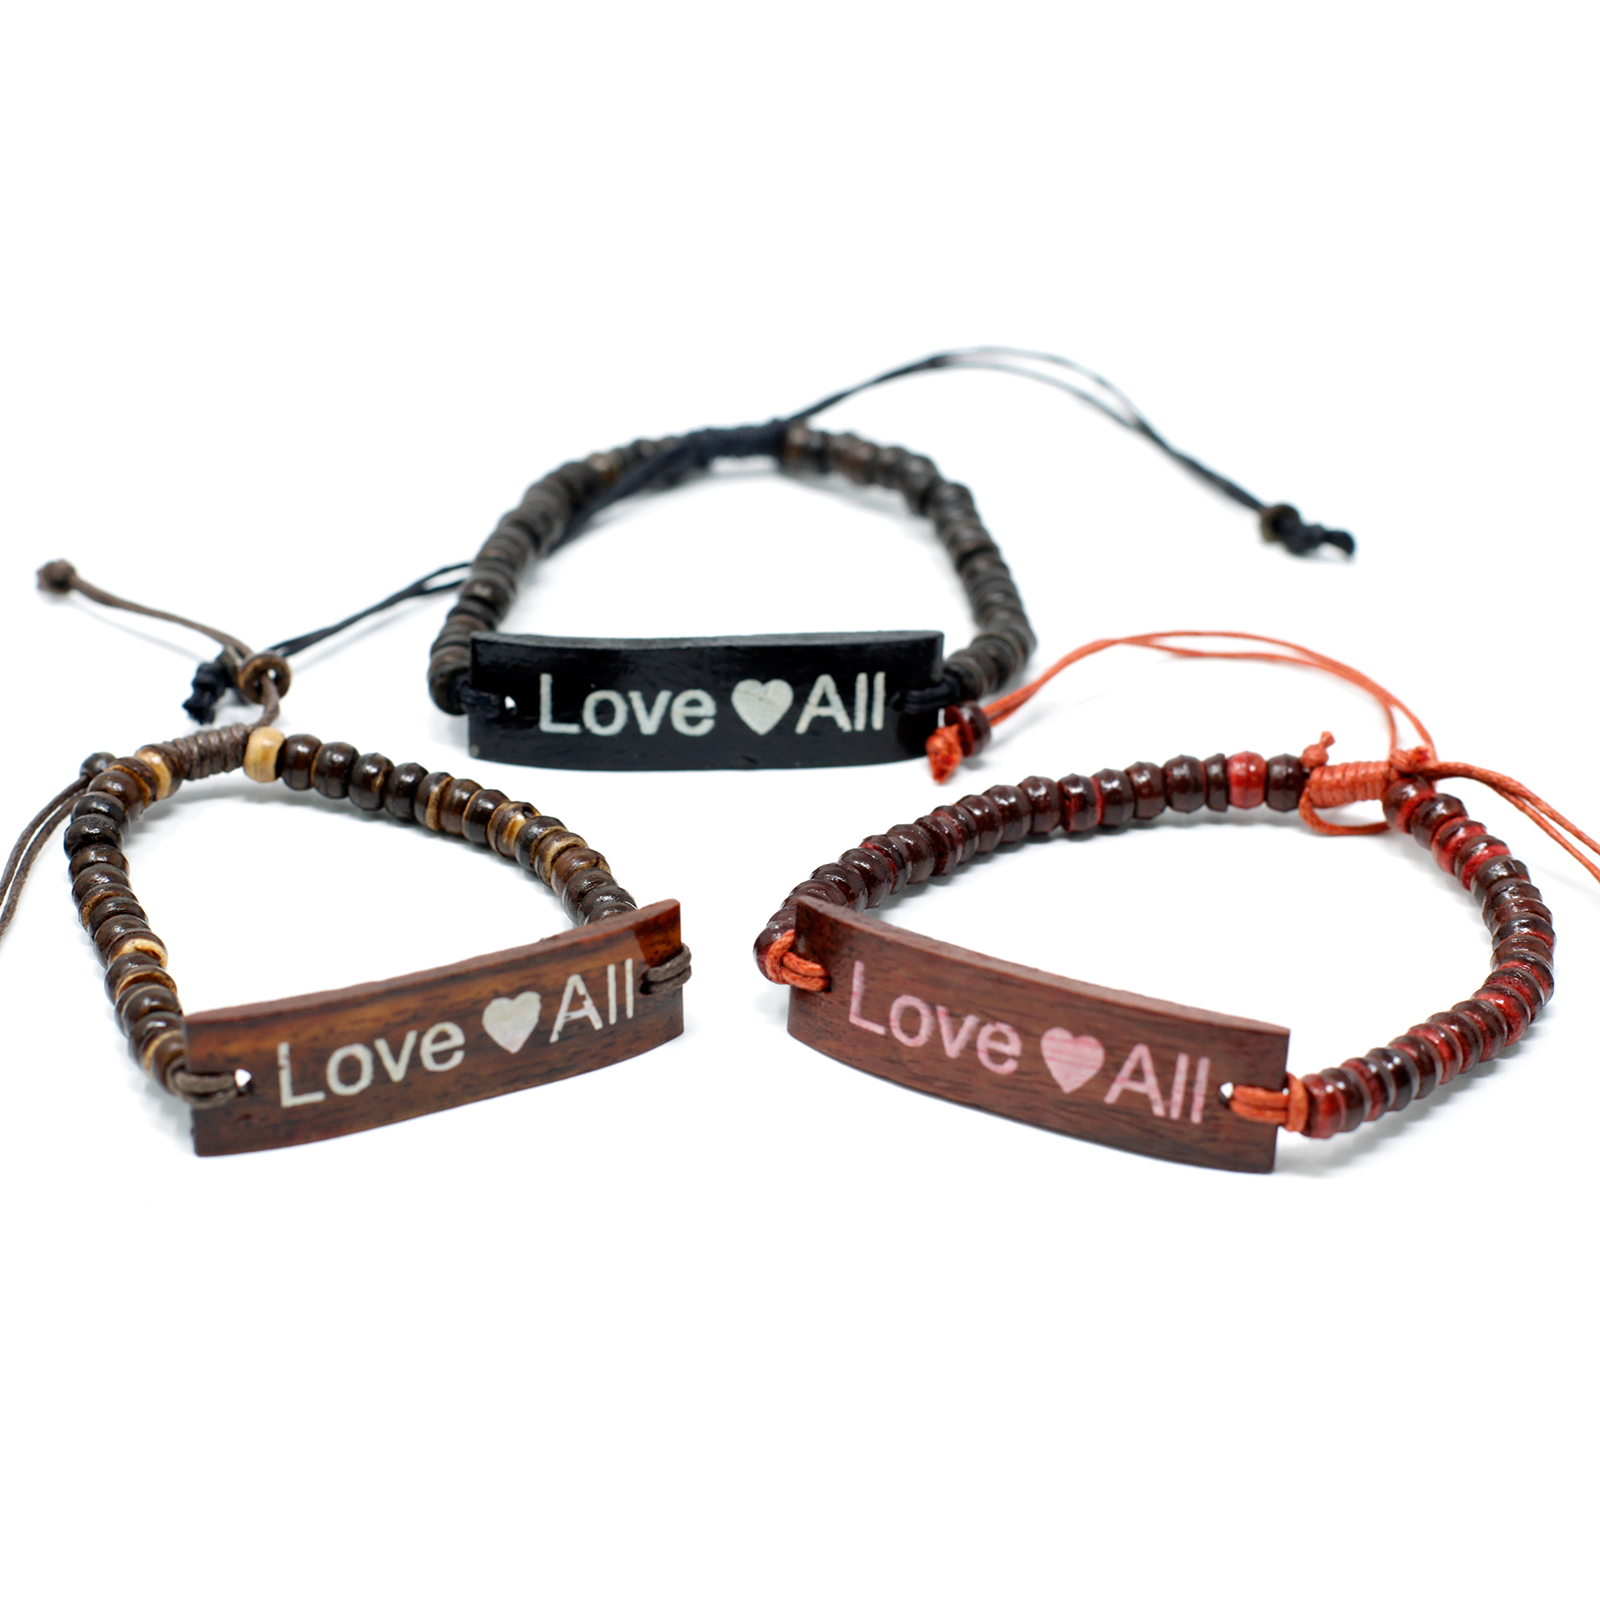 6 x Coco Slogan Bracelets - Love All